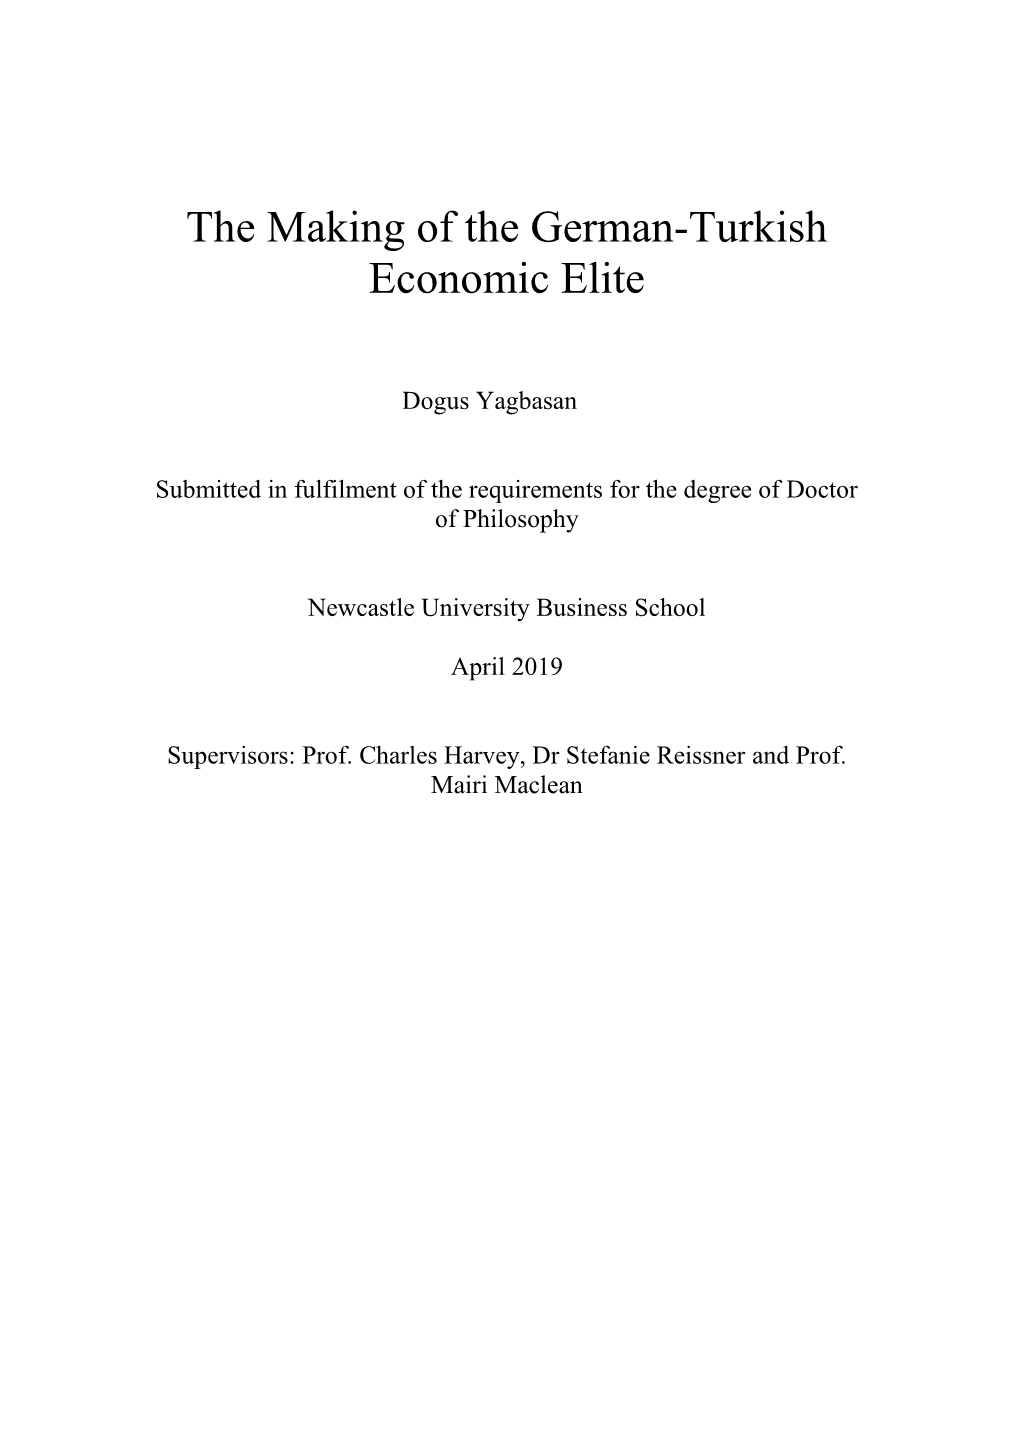 The Making of the German-Turkish Economic Elite